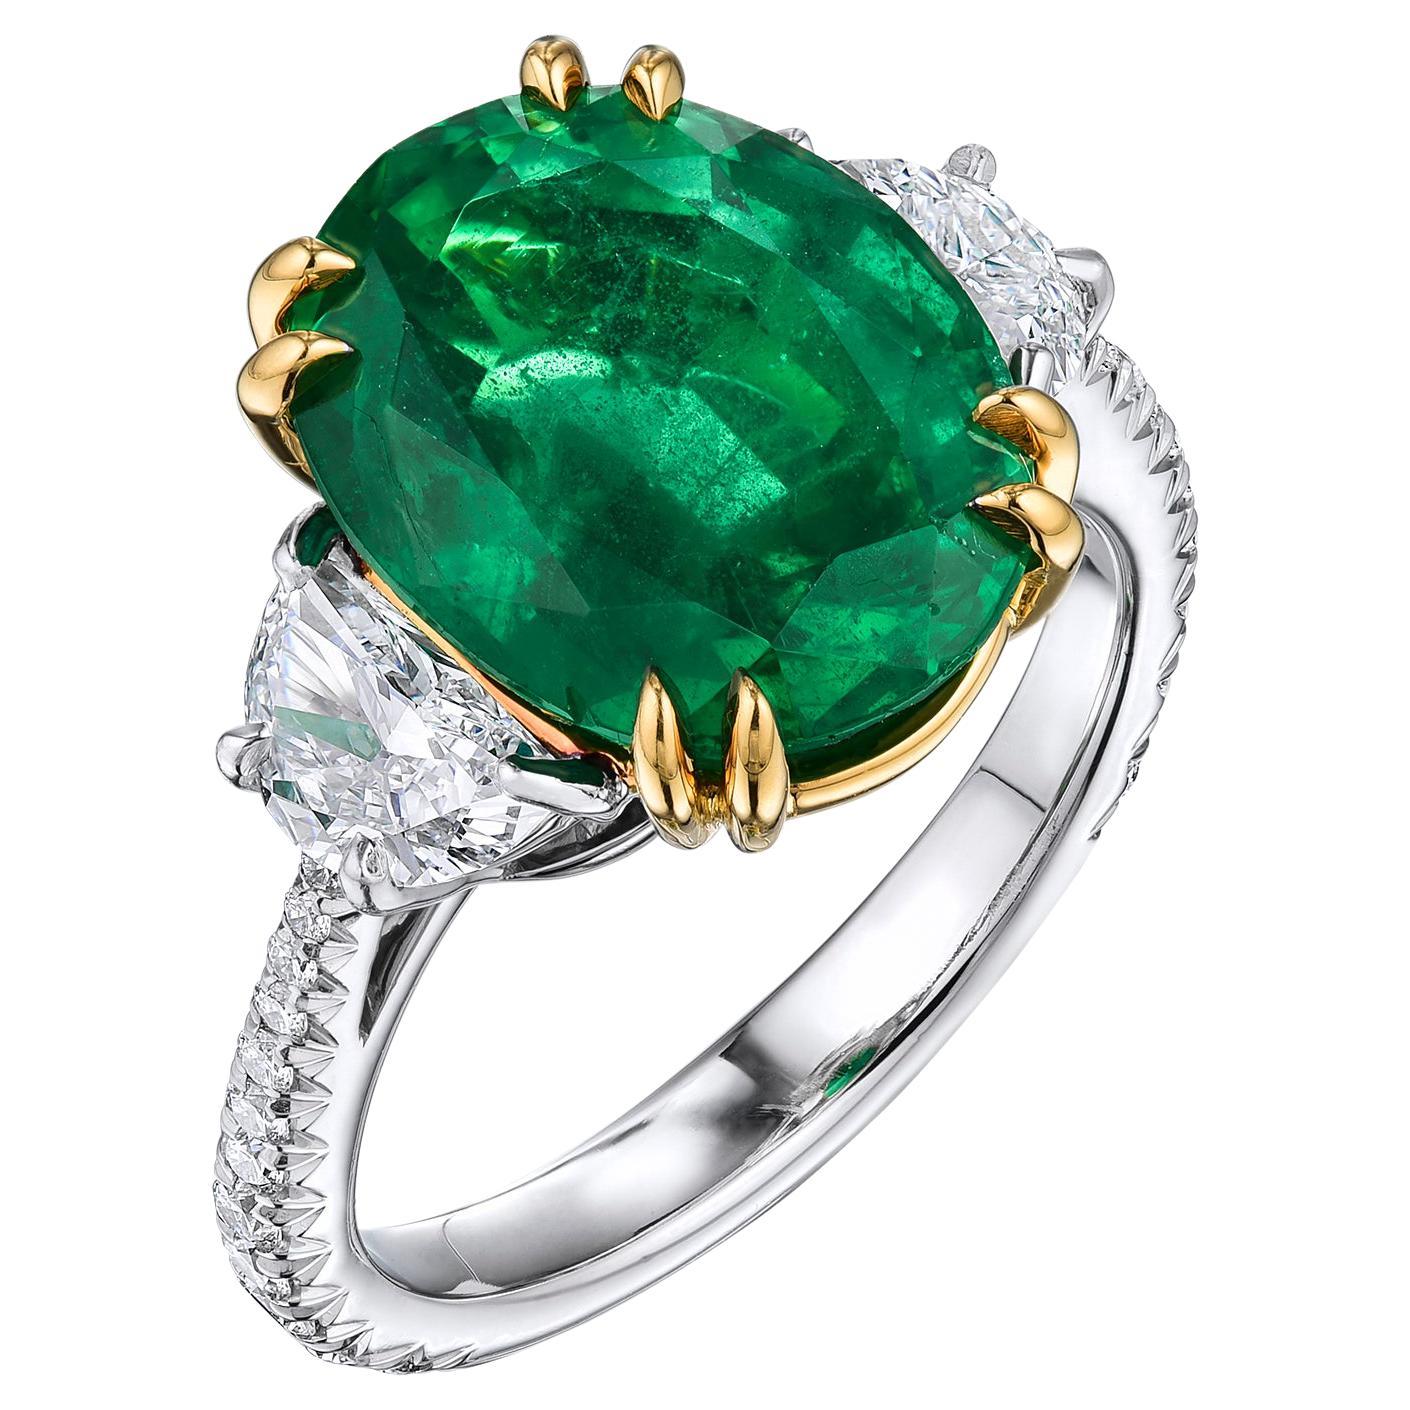 Oval 5.72 Ct Green Emerald Platinum Cocktail/Engagement Ring Set in Platinum